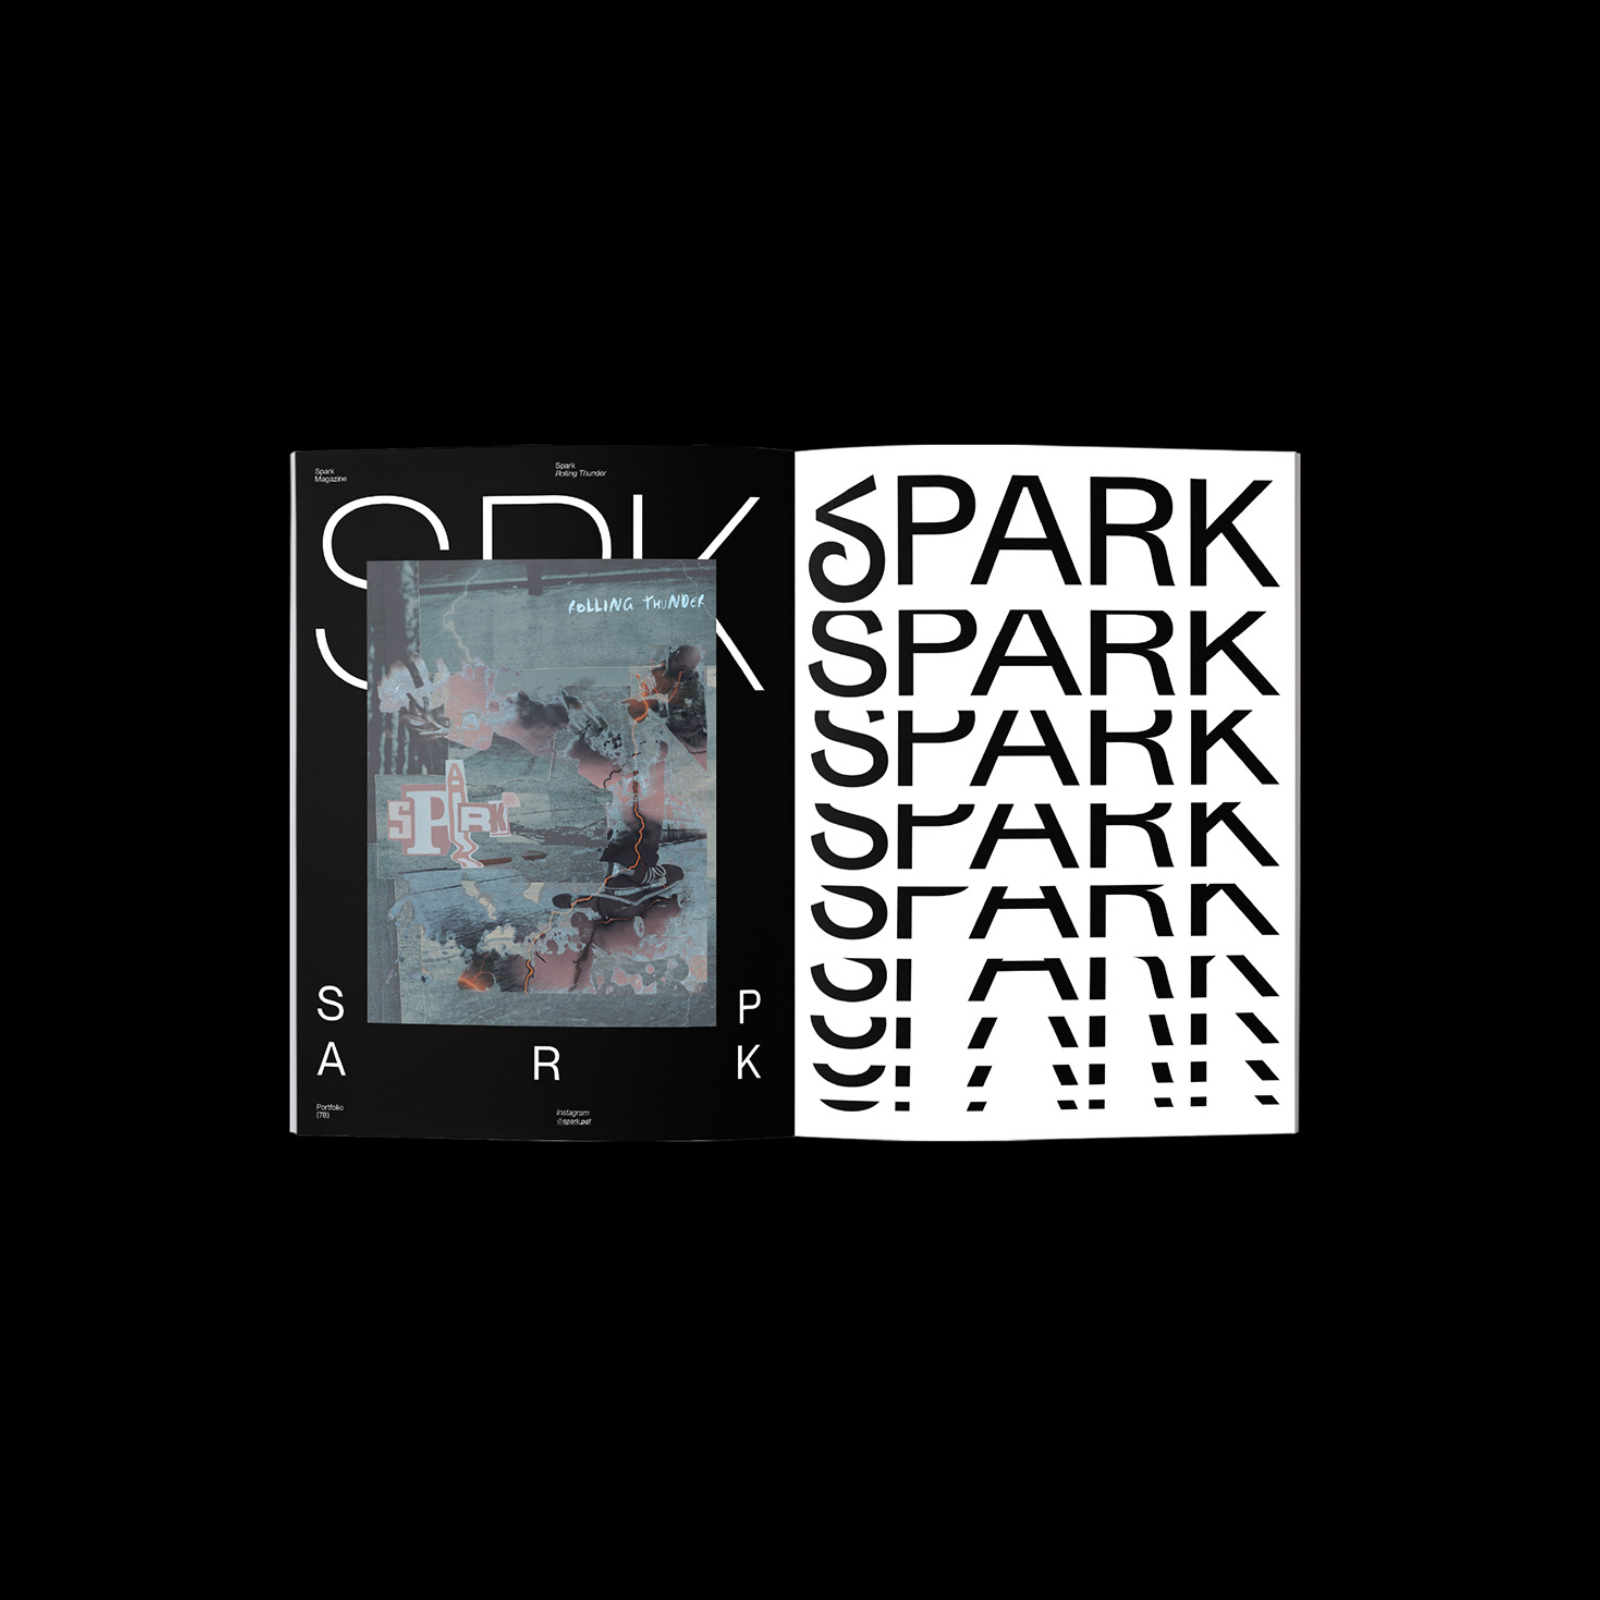 Skate Art Merges in SPARK's Editorial Design Showcase